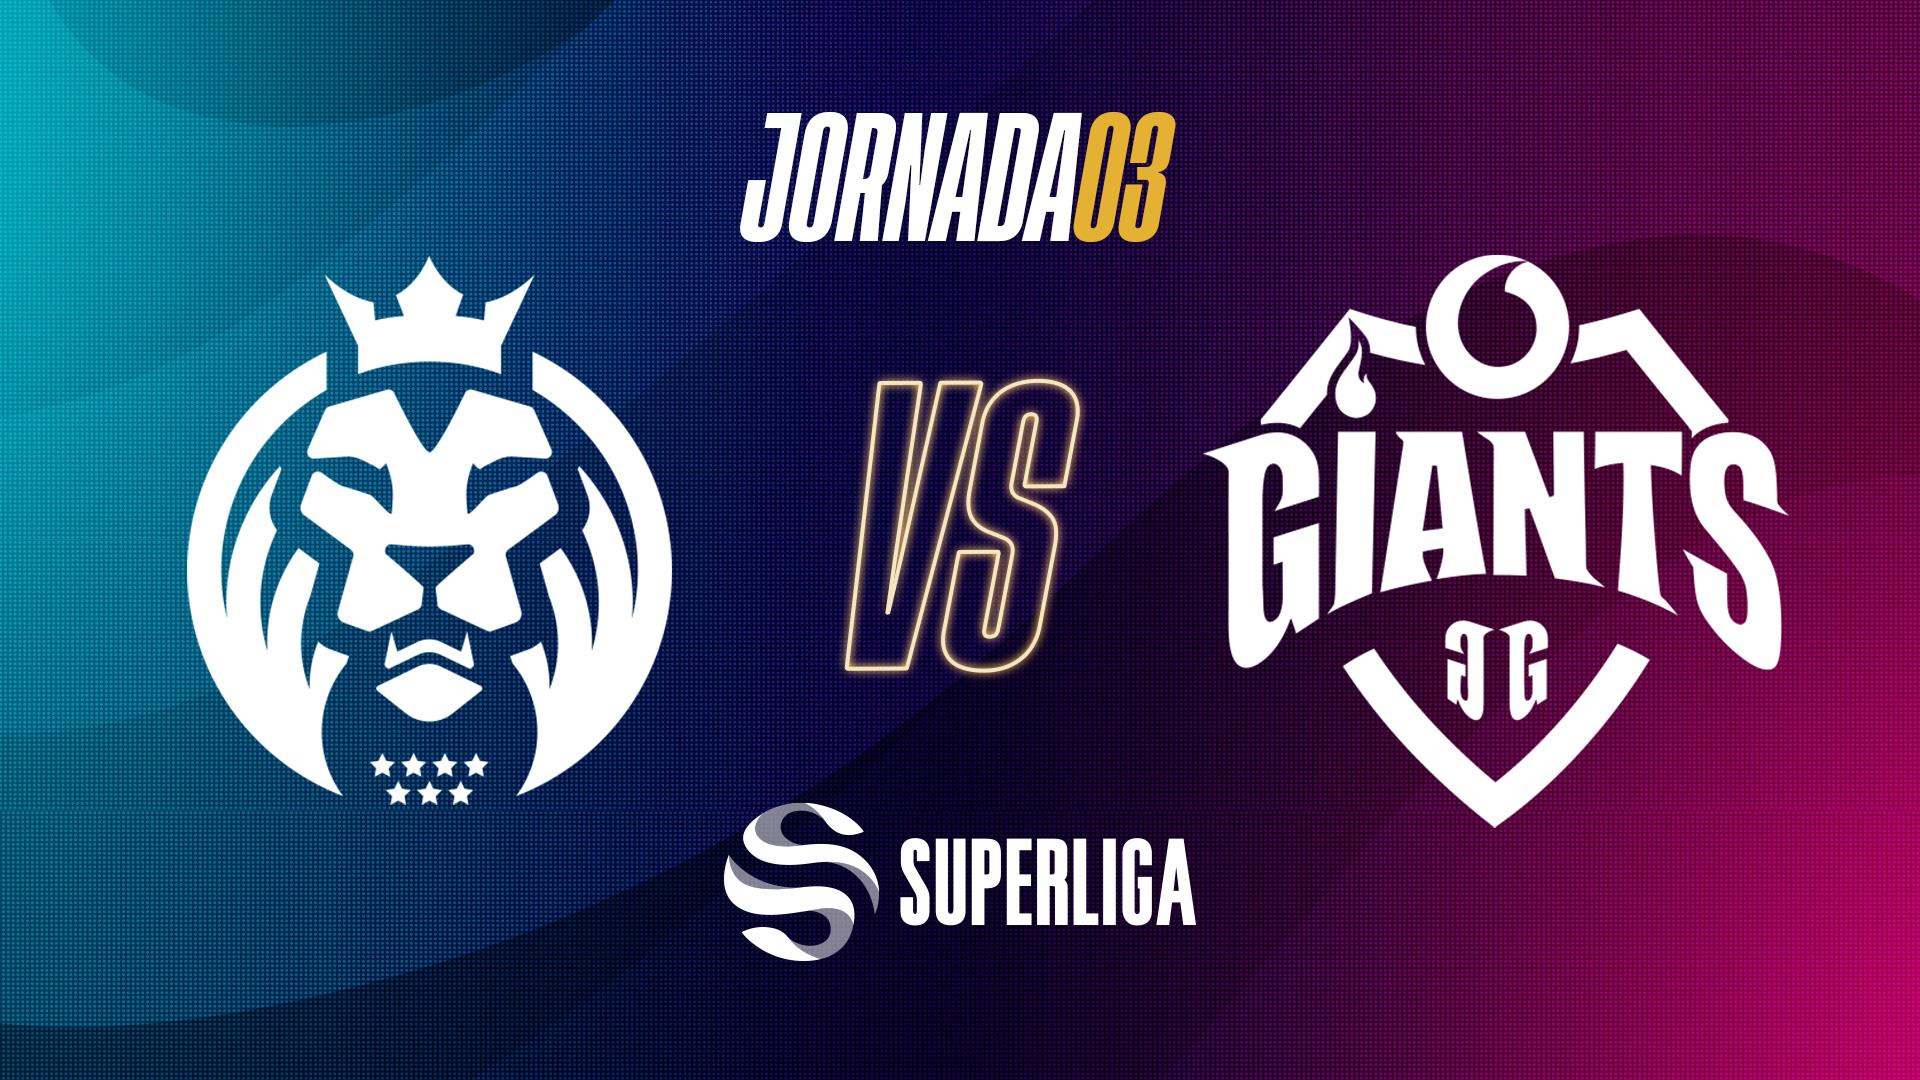 Superliga Jornada 3 I MAD Lions y Vodafone Giants